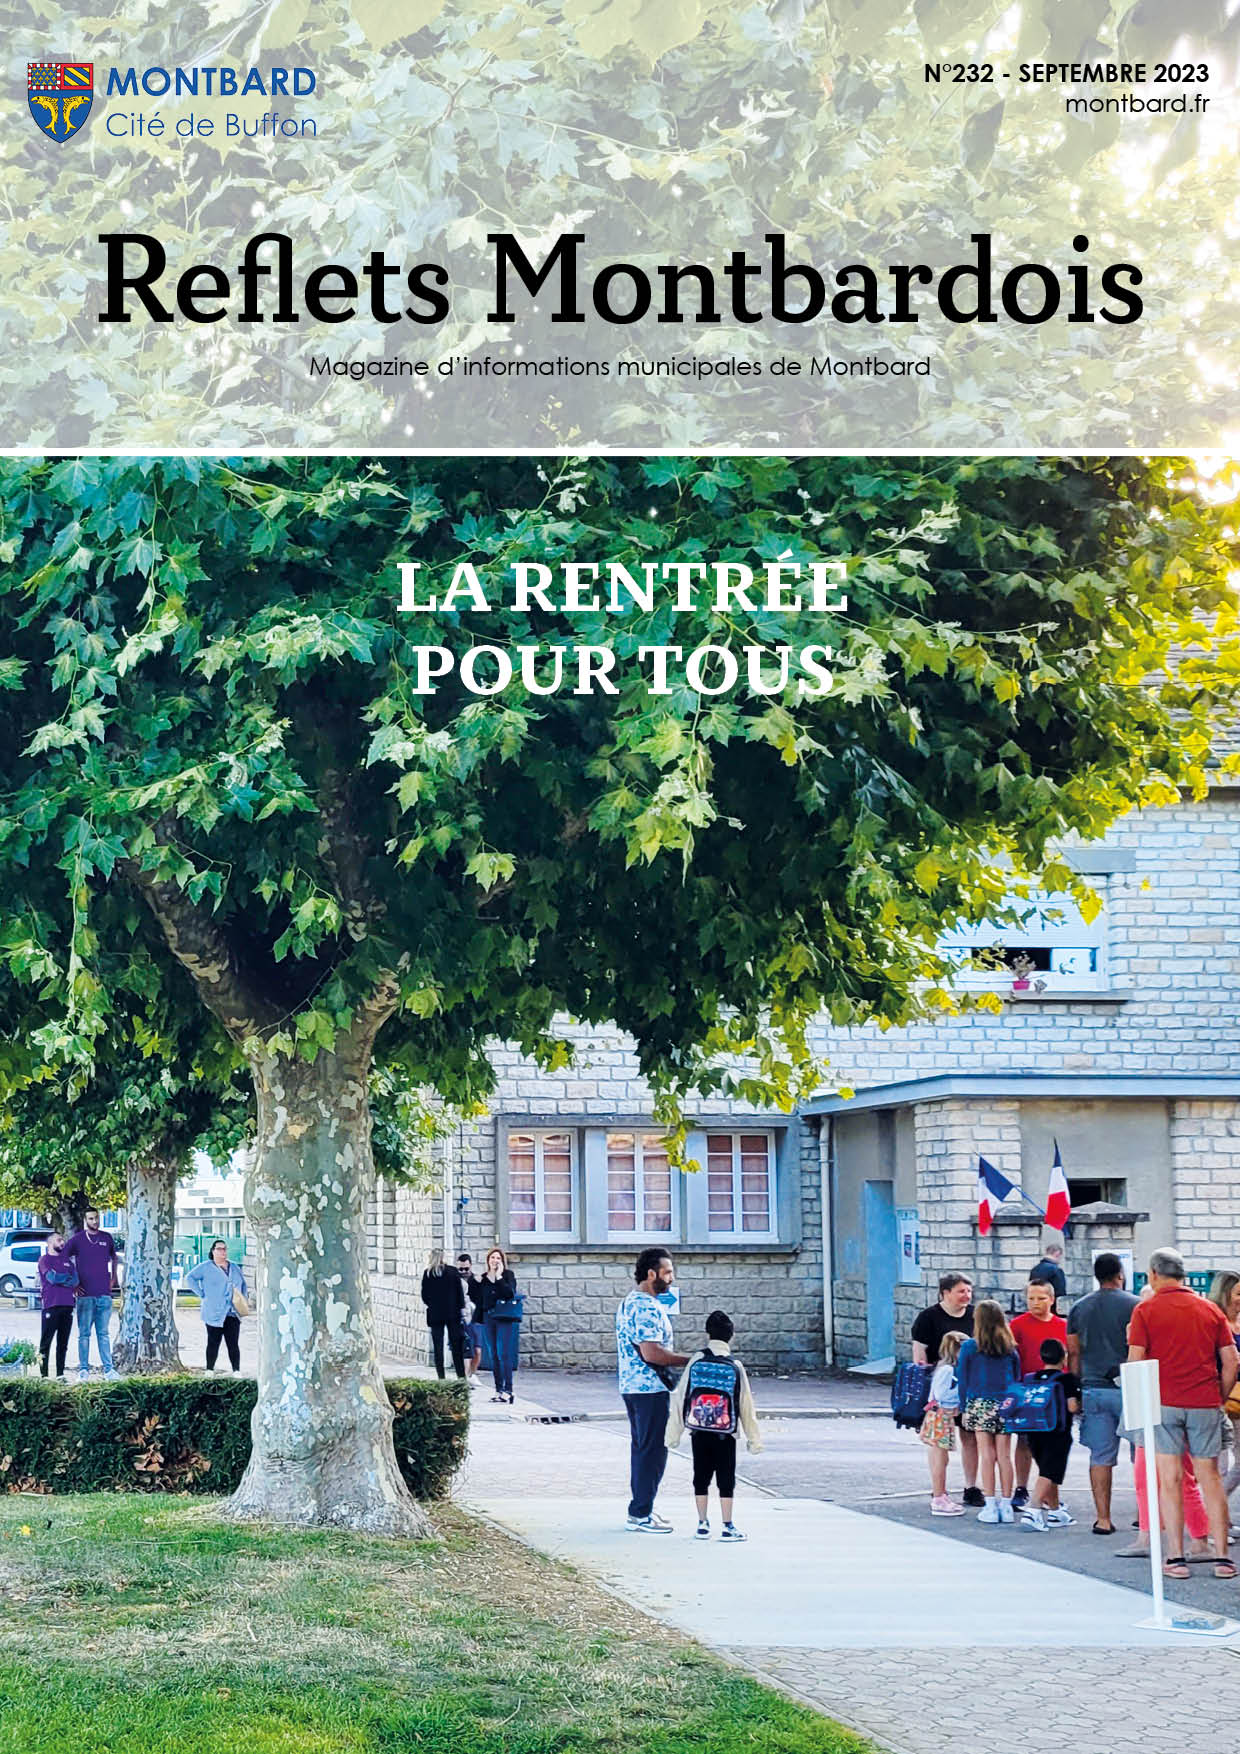 reflets Montbardois septembre 2023